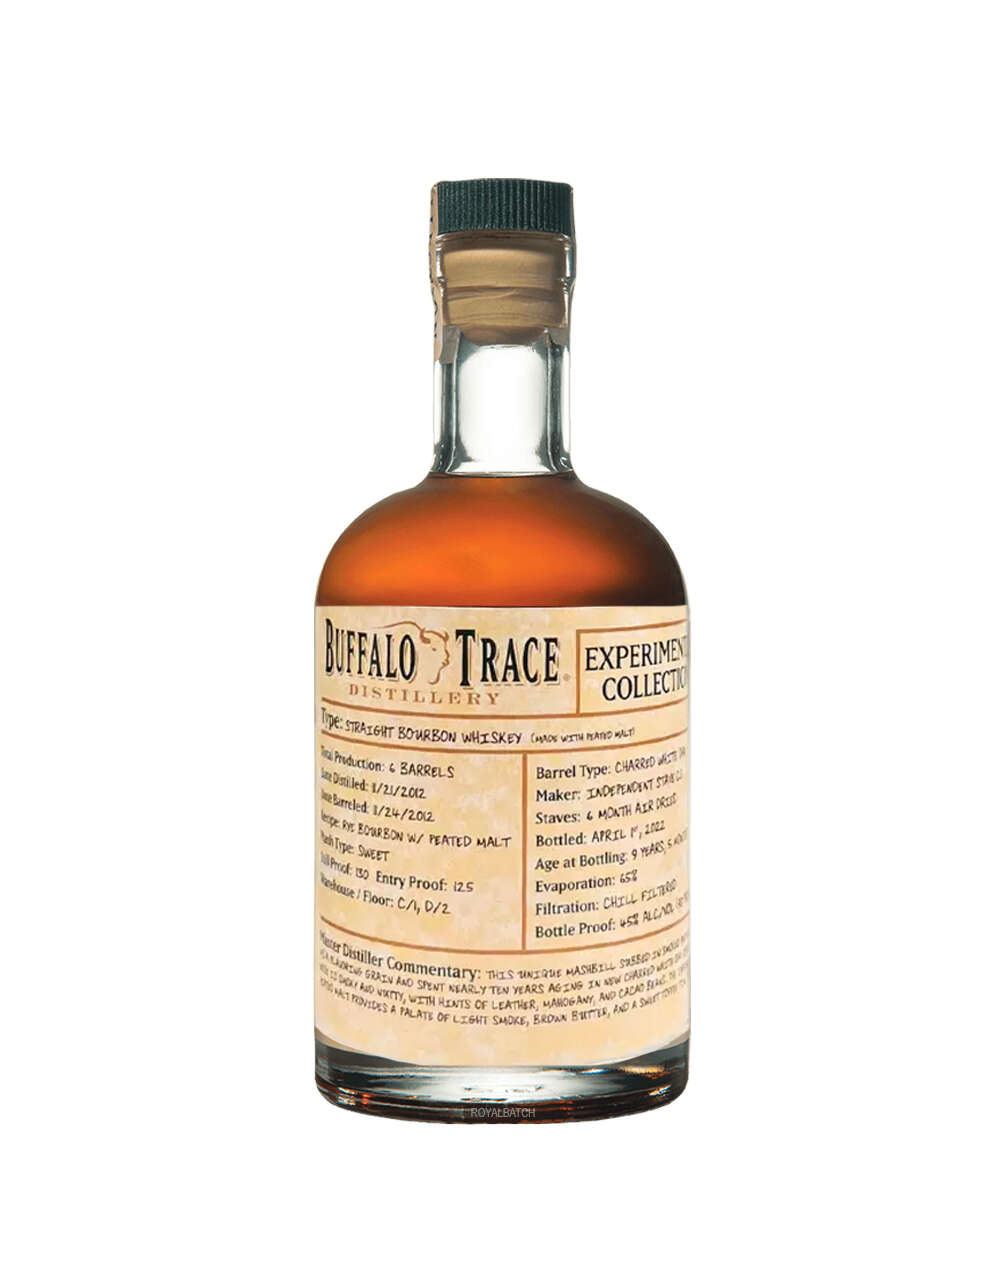 Buffalo Trace - Kentucky Straight Bourbon Whiskey - Myrtle Wines & Spirits